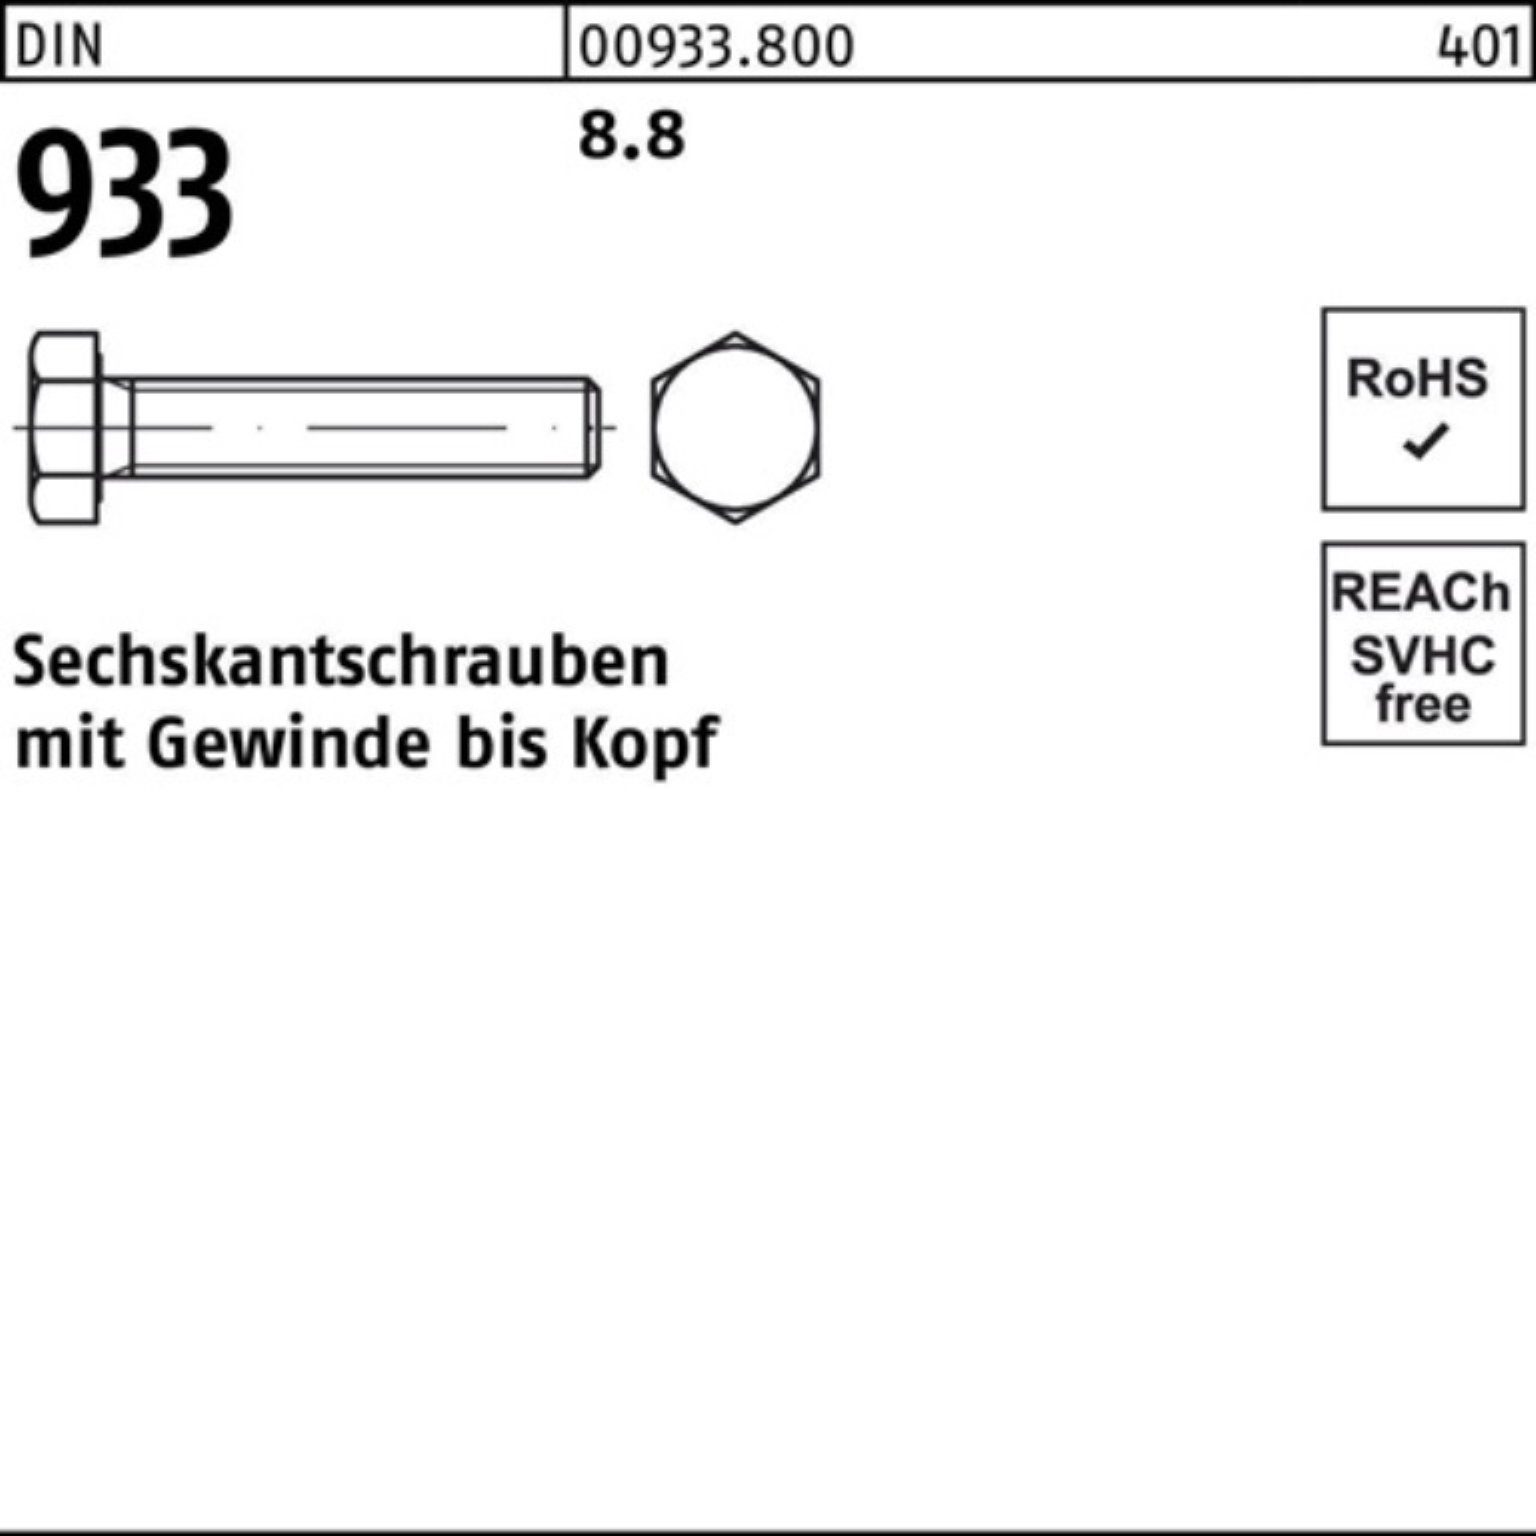 Pack Reyher VG M5x 8.8 200 Sechskantschraube 933 DIN 90 Stück 200er 933 Sechskantschraube DIN